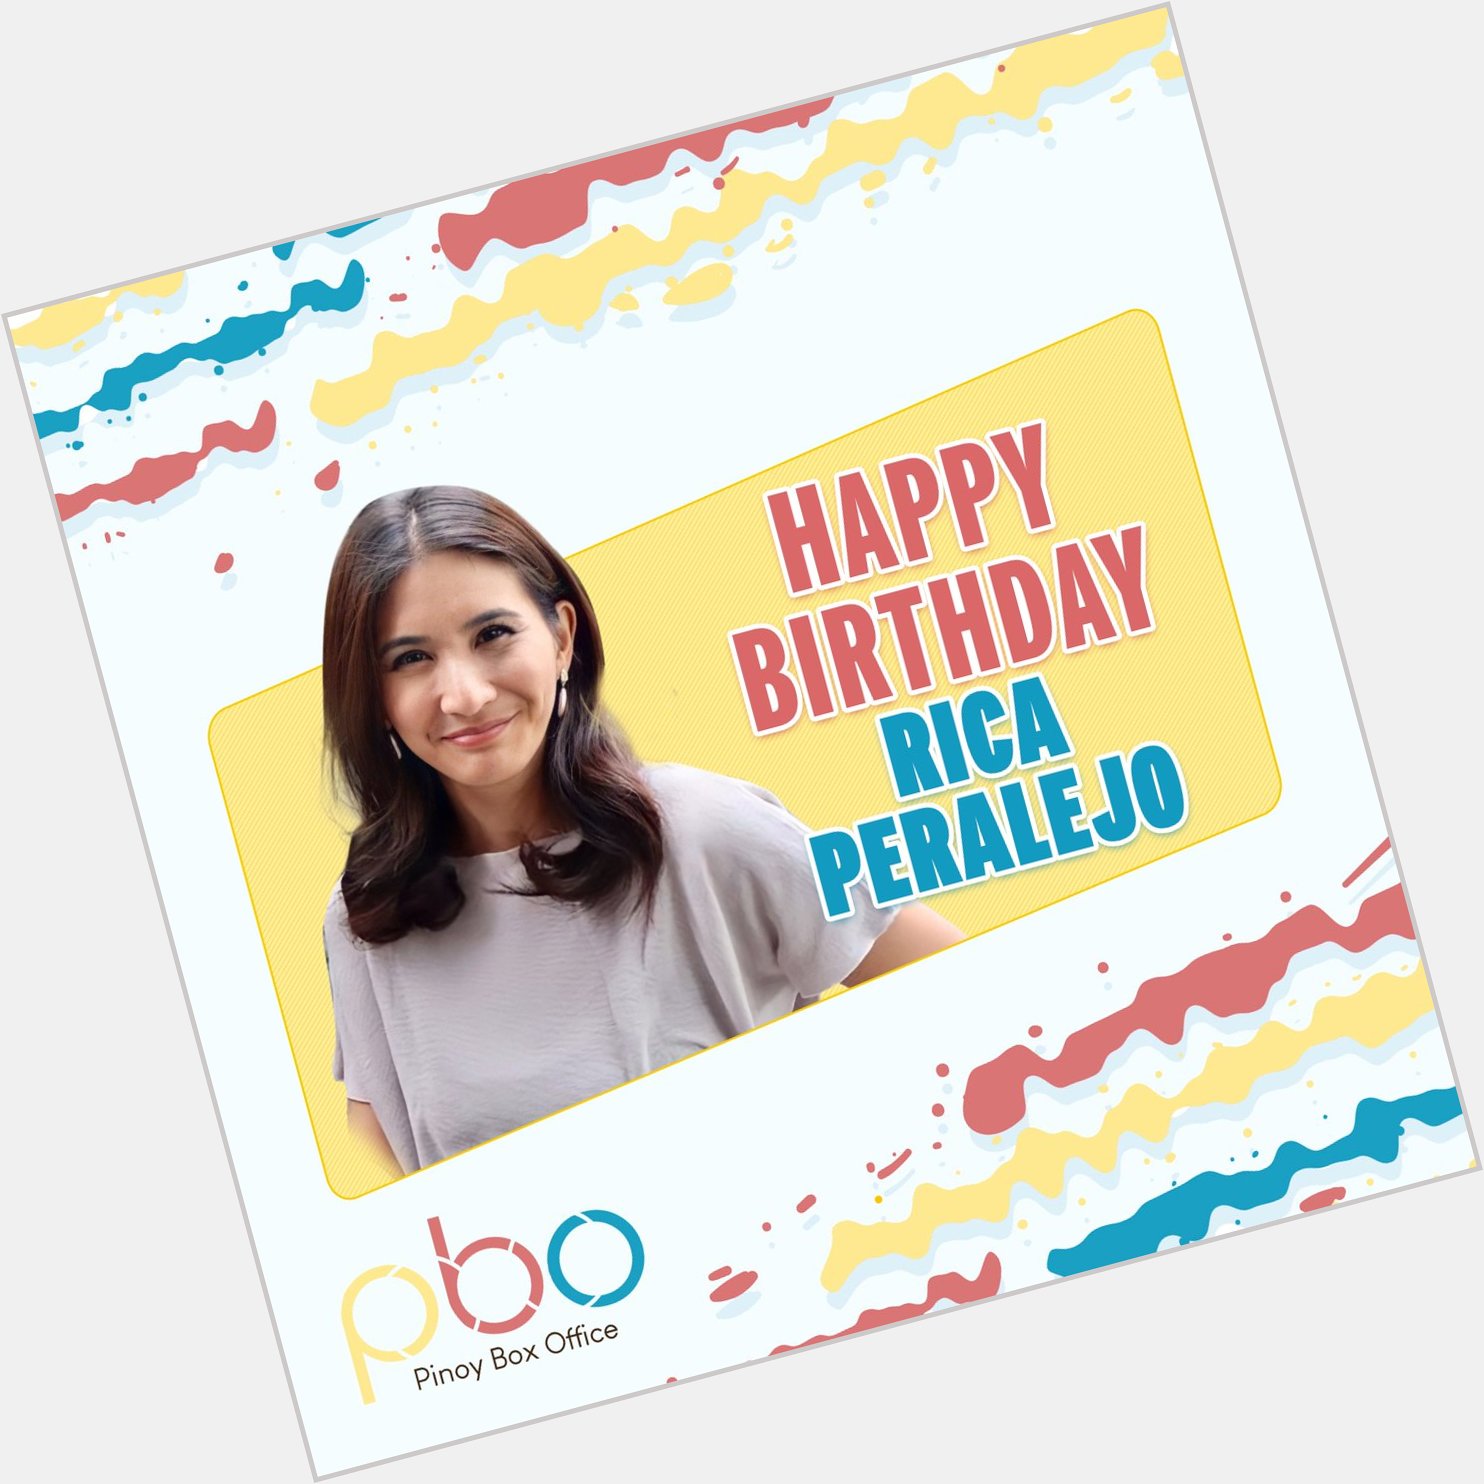 Happy birthday, Rica Peralejo! May you prosper and shine everywhere you go! 